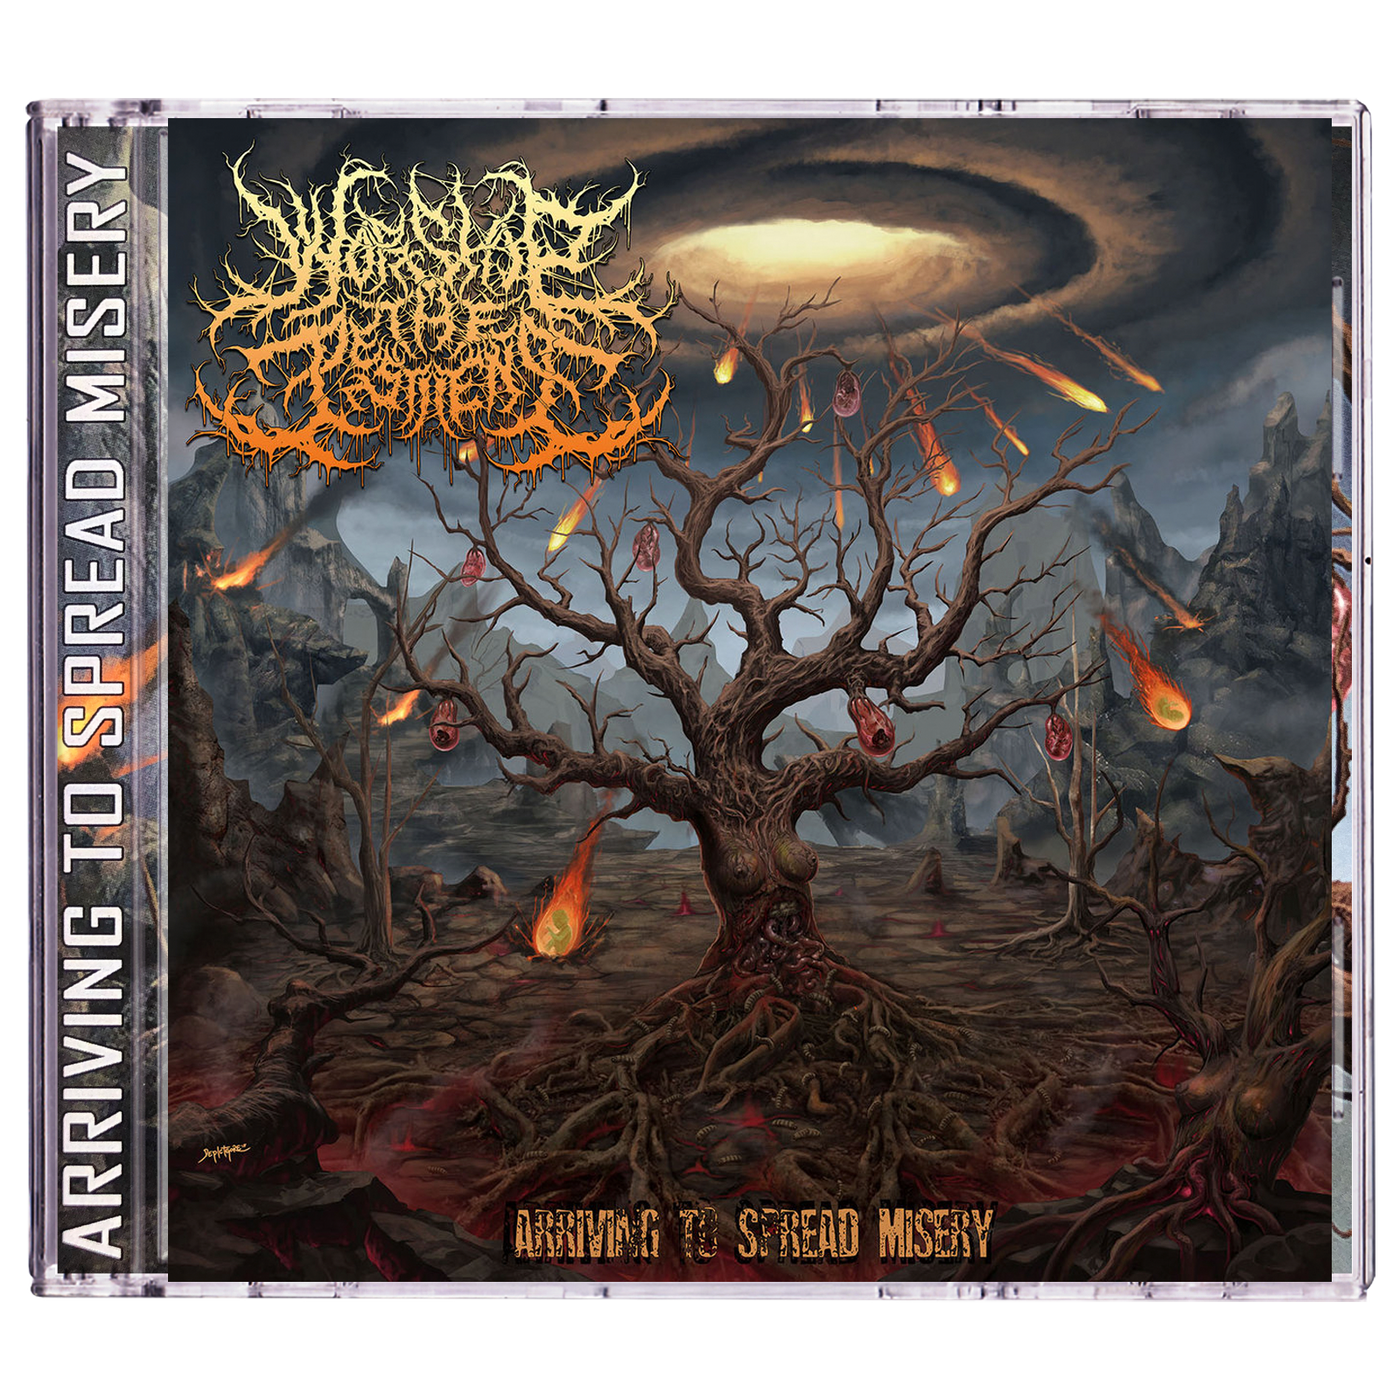 Worship The Pestilence 'Arriving to Spread Misery' CD